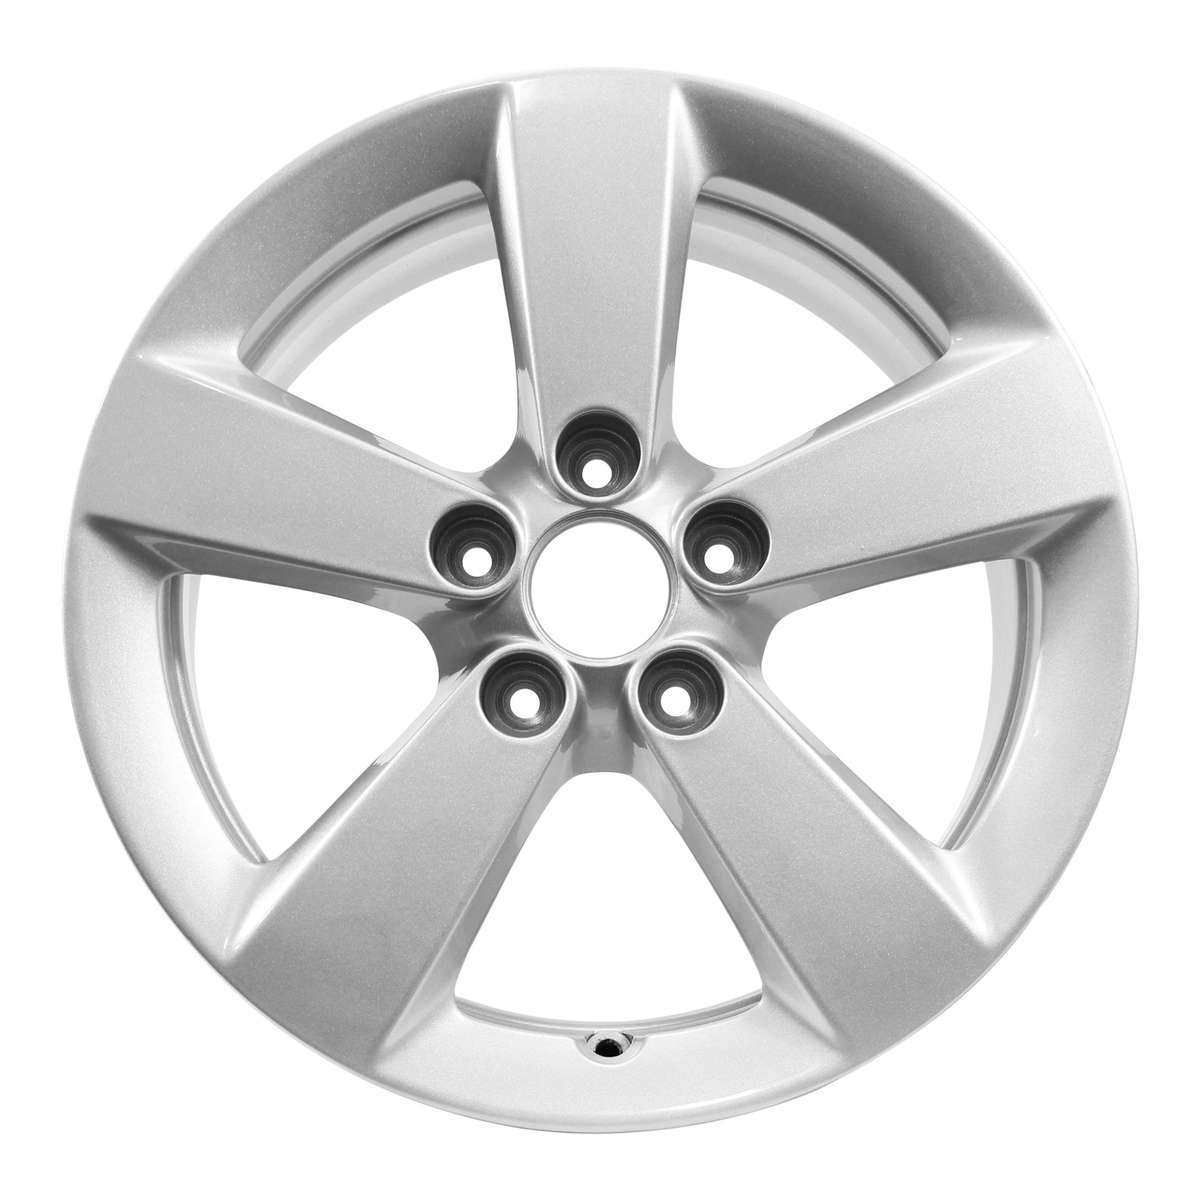 2015 Dodge Dart 16" OEM Wheel Rim W2483S